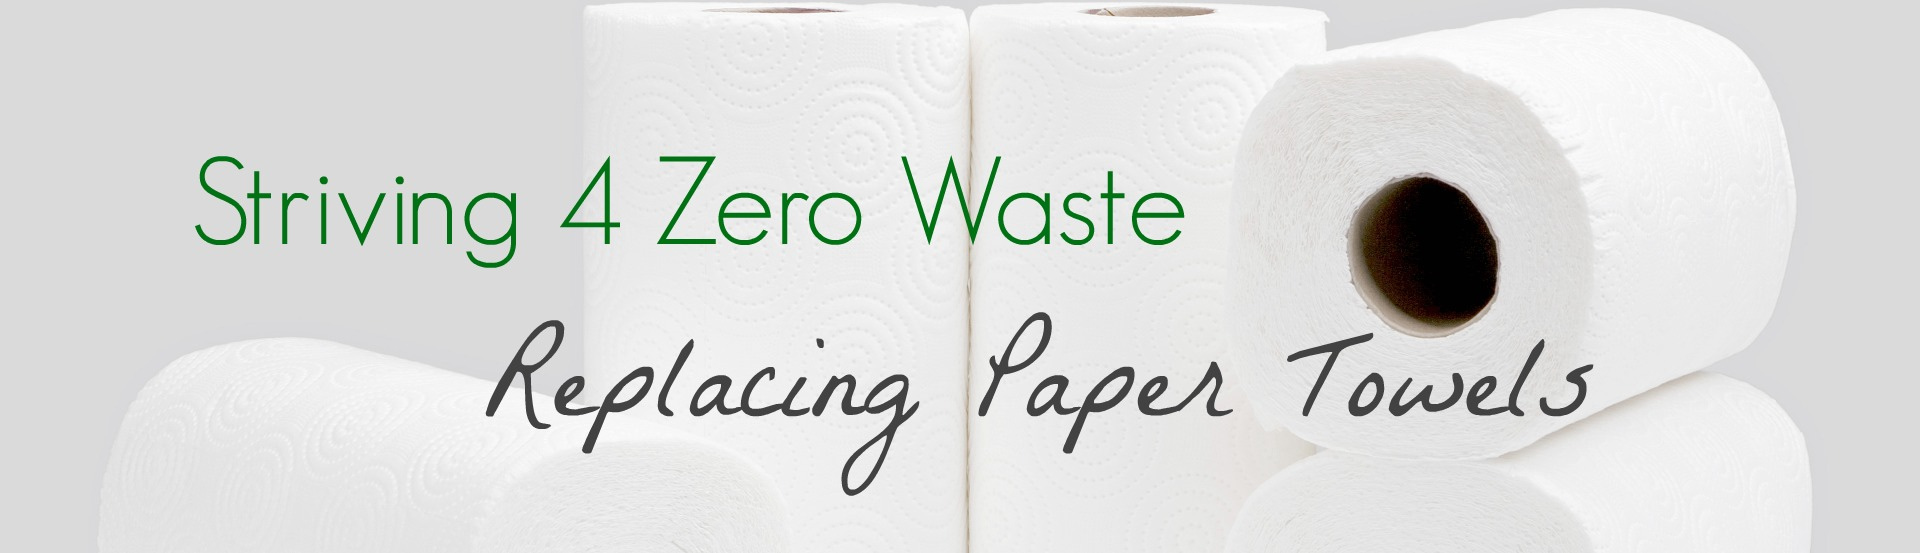 Striving 4 Zero Waste - Replacing Paper Towels